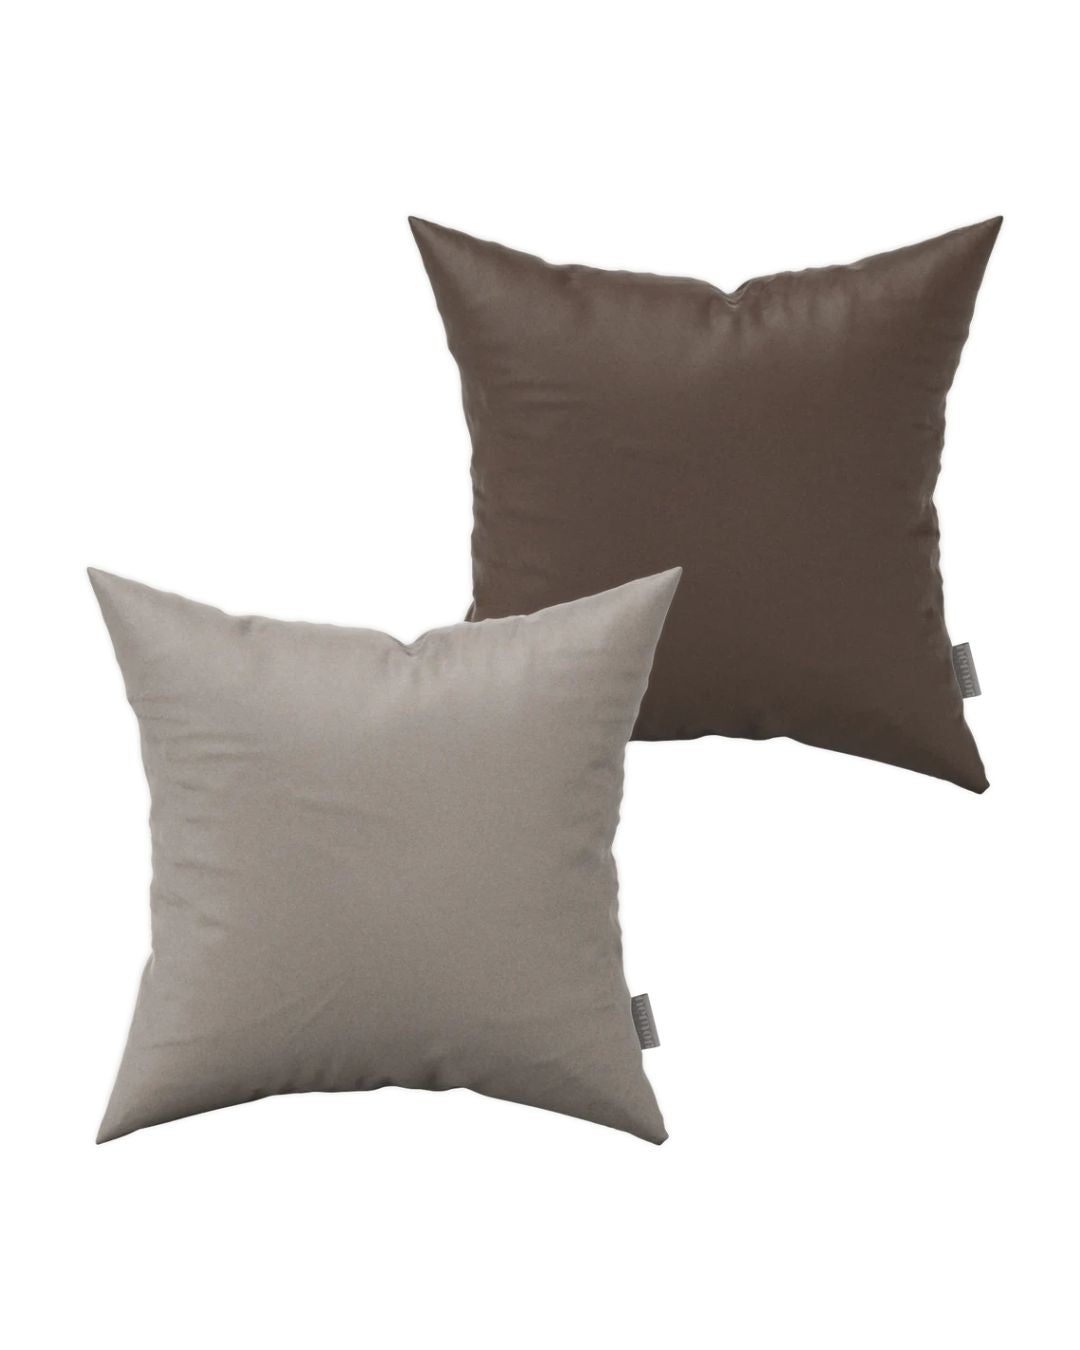 Alpin Beige & Moka Pillows - Set of 2